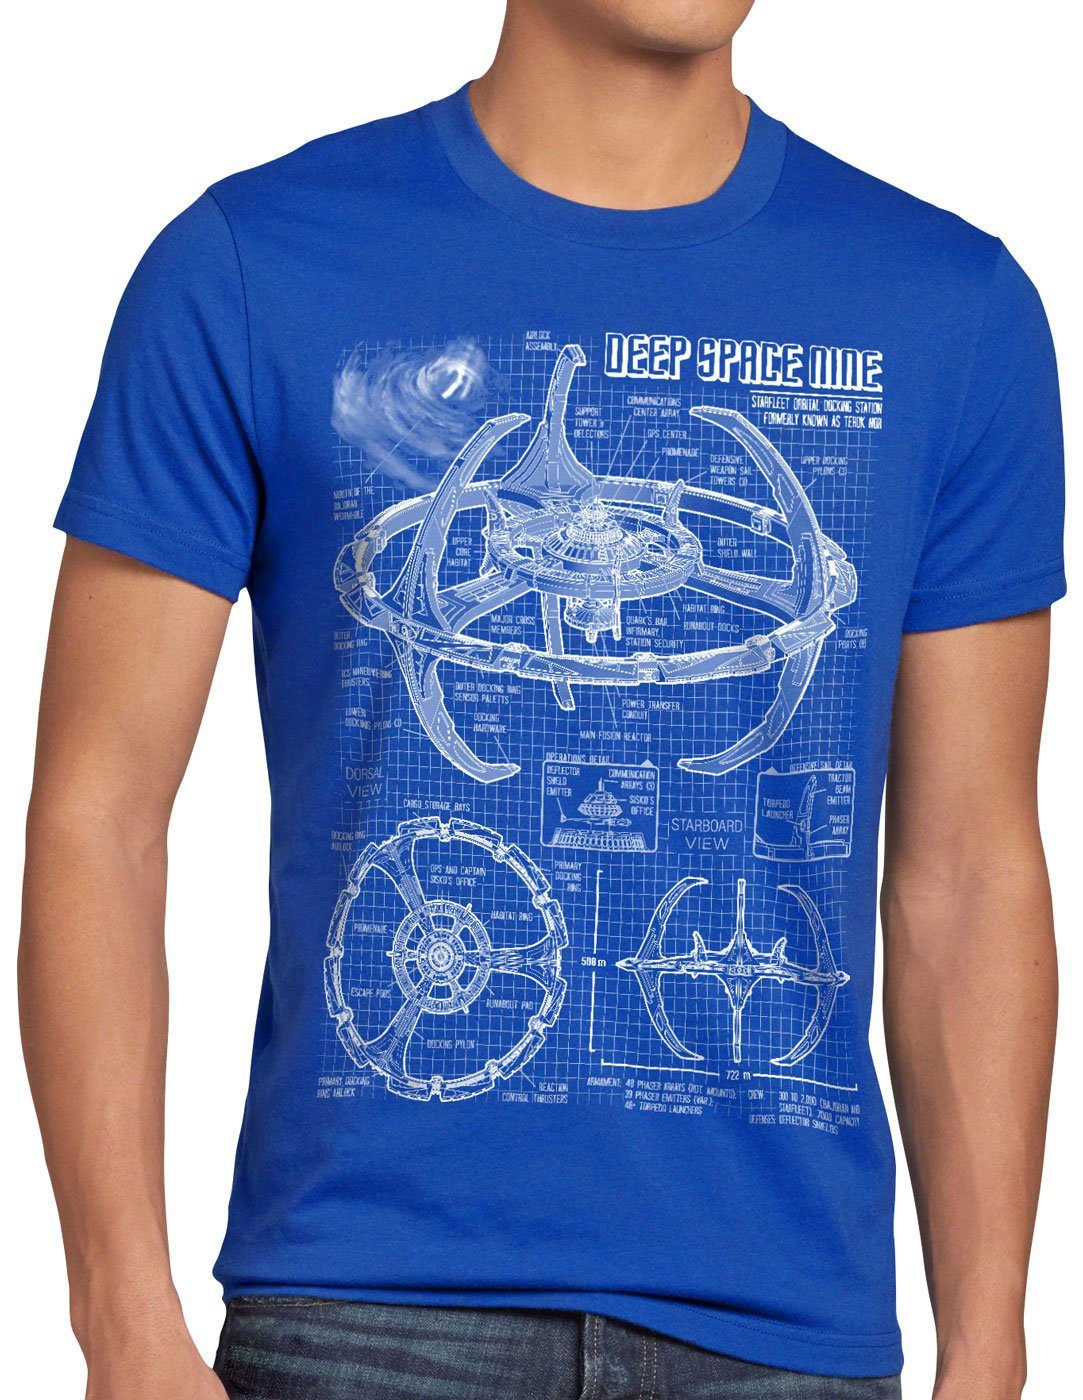 style3 Print-Shirt Herren T-Shirt Deep trek Nine Space star sisko blau trekkie blu-ray sternenflotte dvd